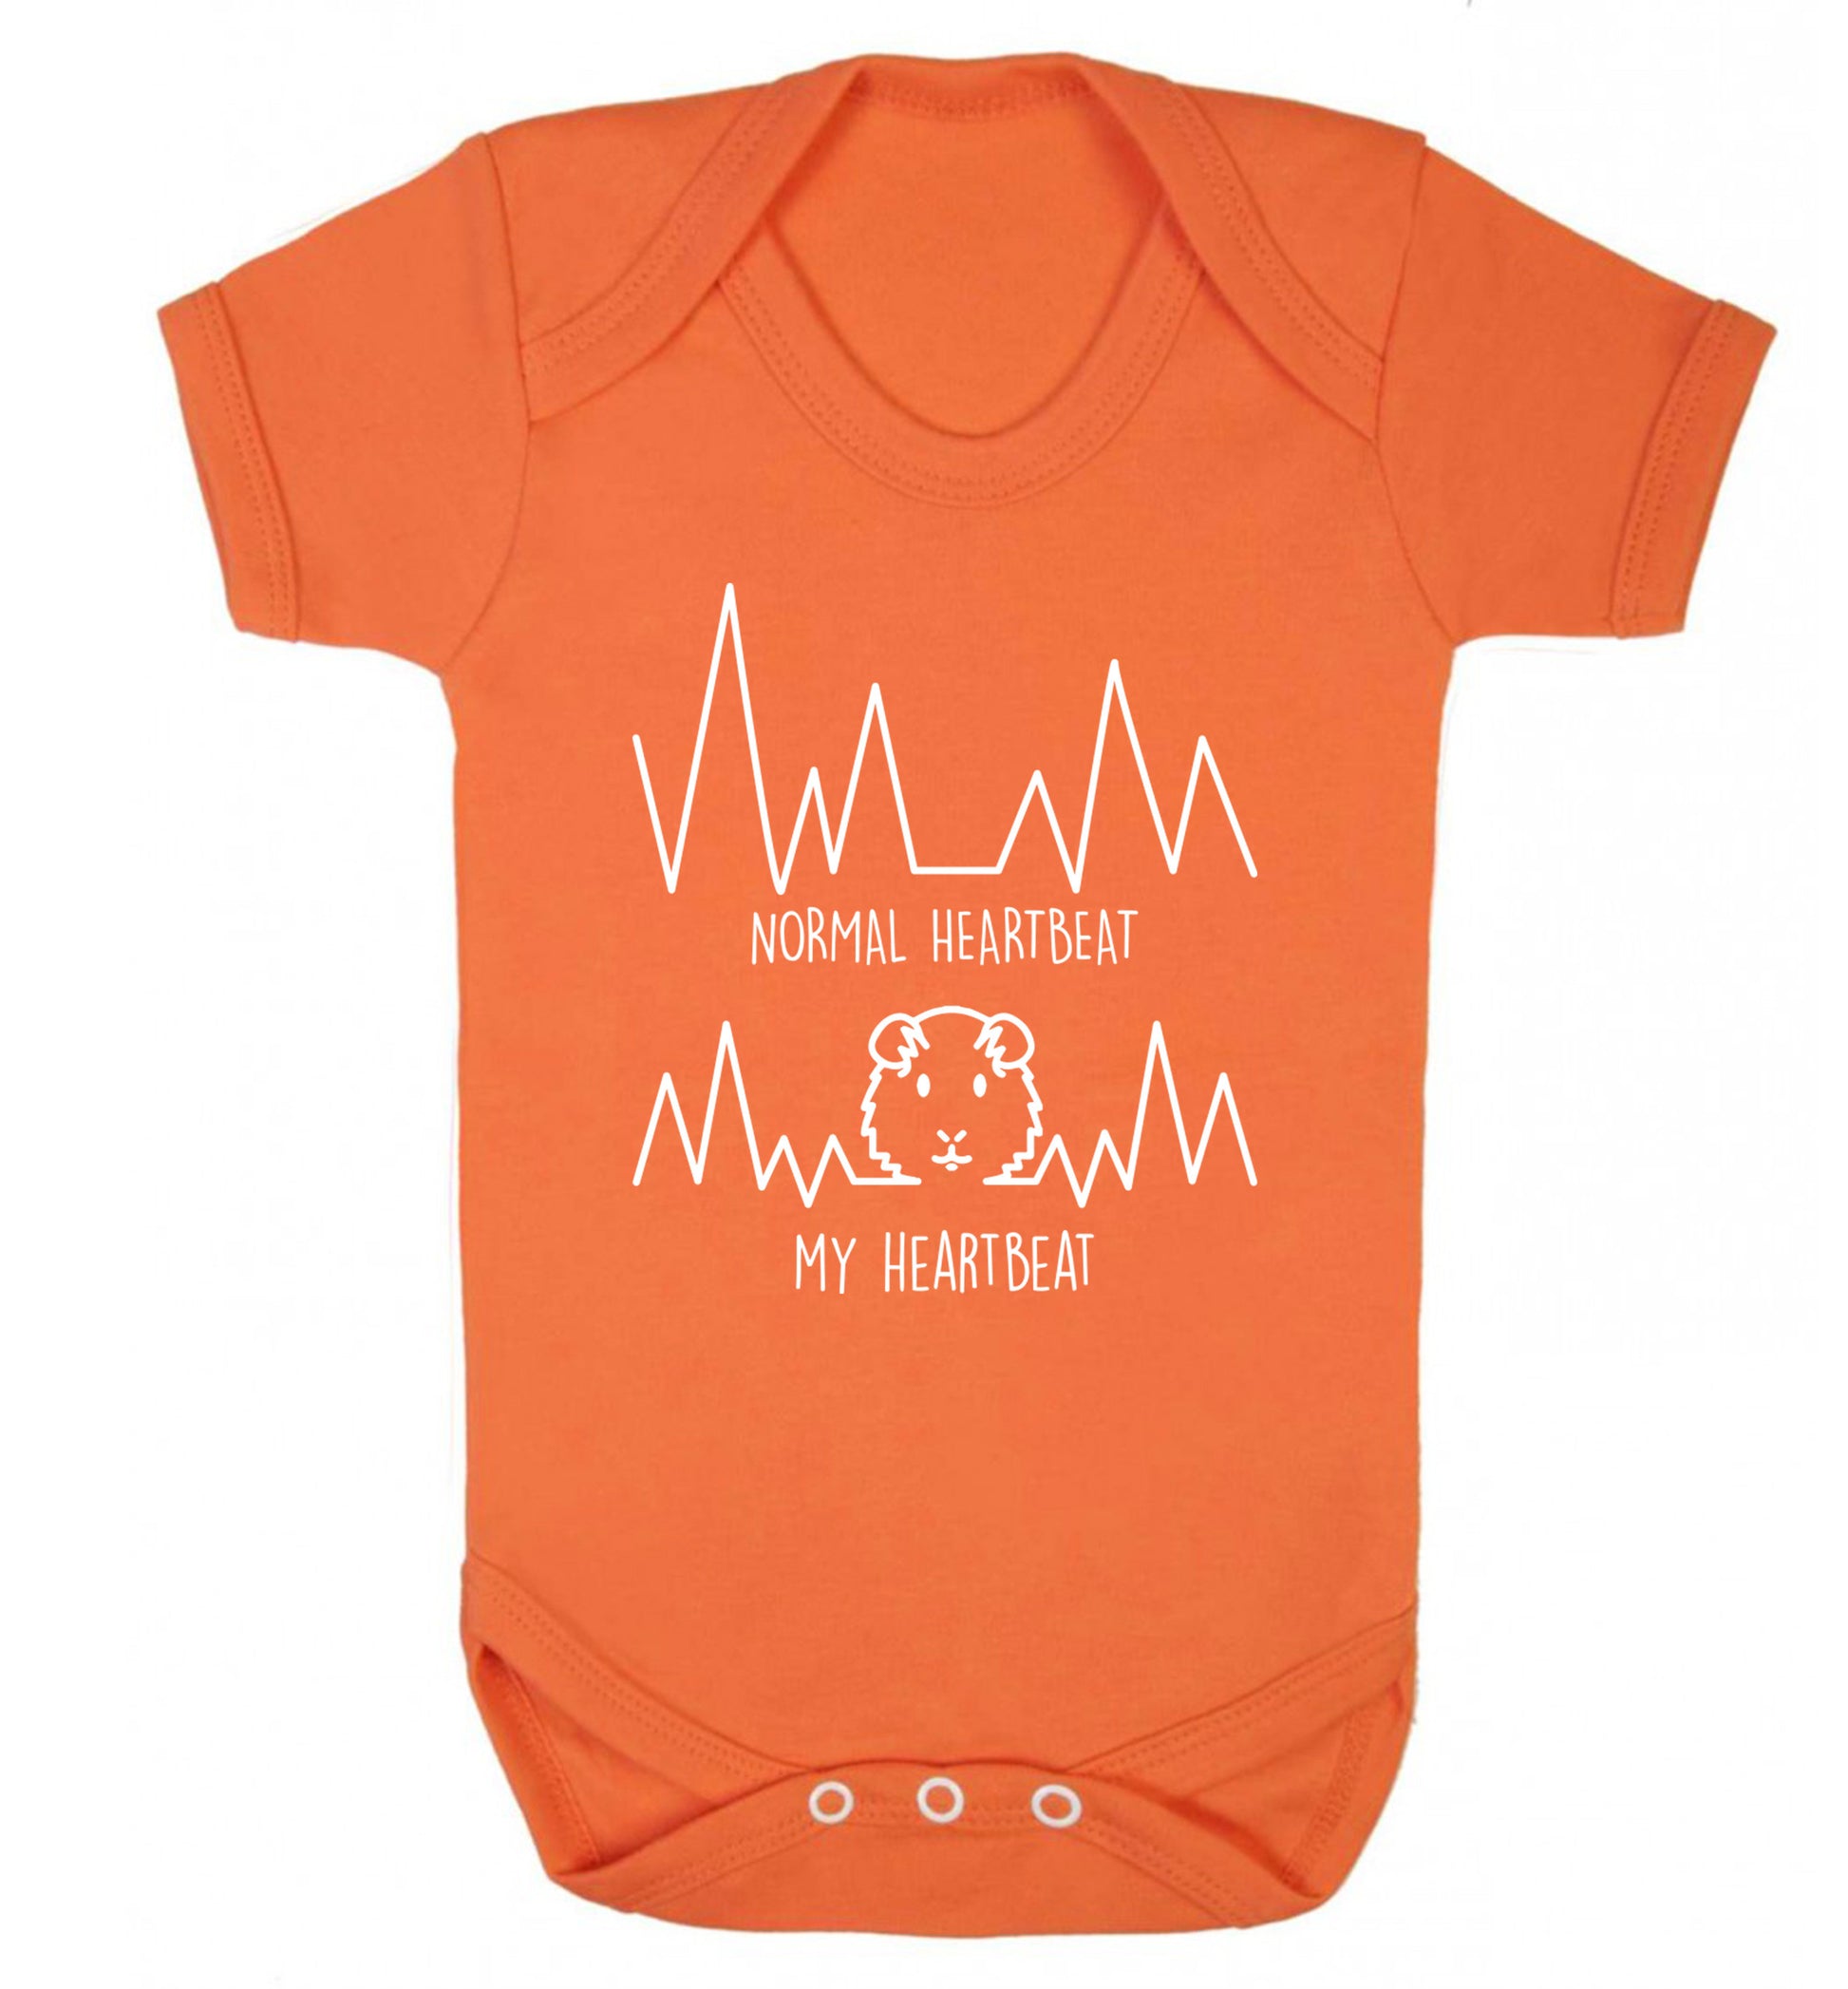 Normal heartbeat vs my heartbeat guinea pig lover Baby Vest orange 18-24 months